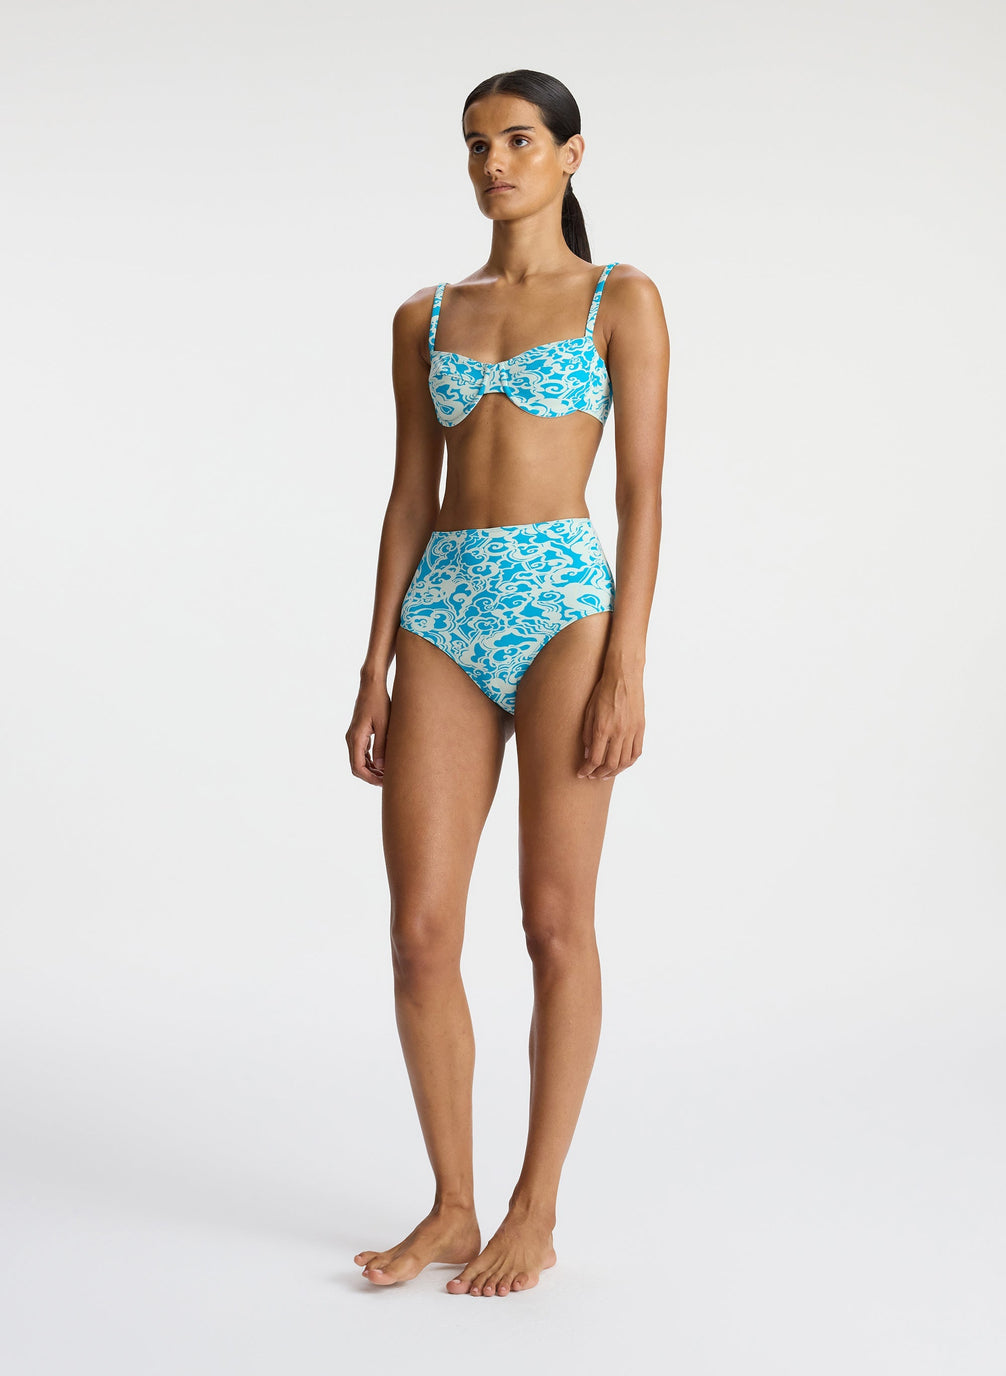 side view of woman wearing aqua print bikini set